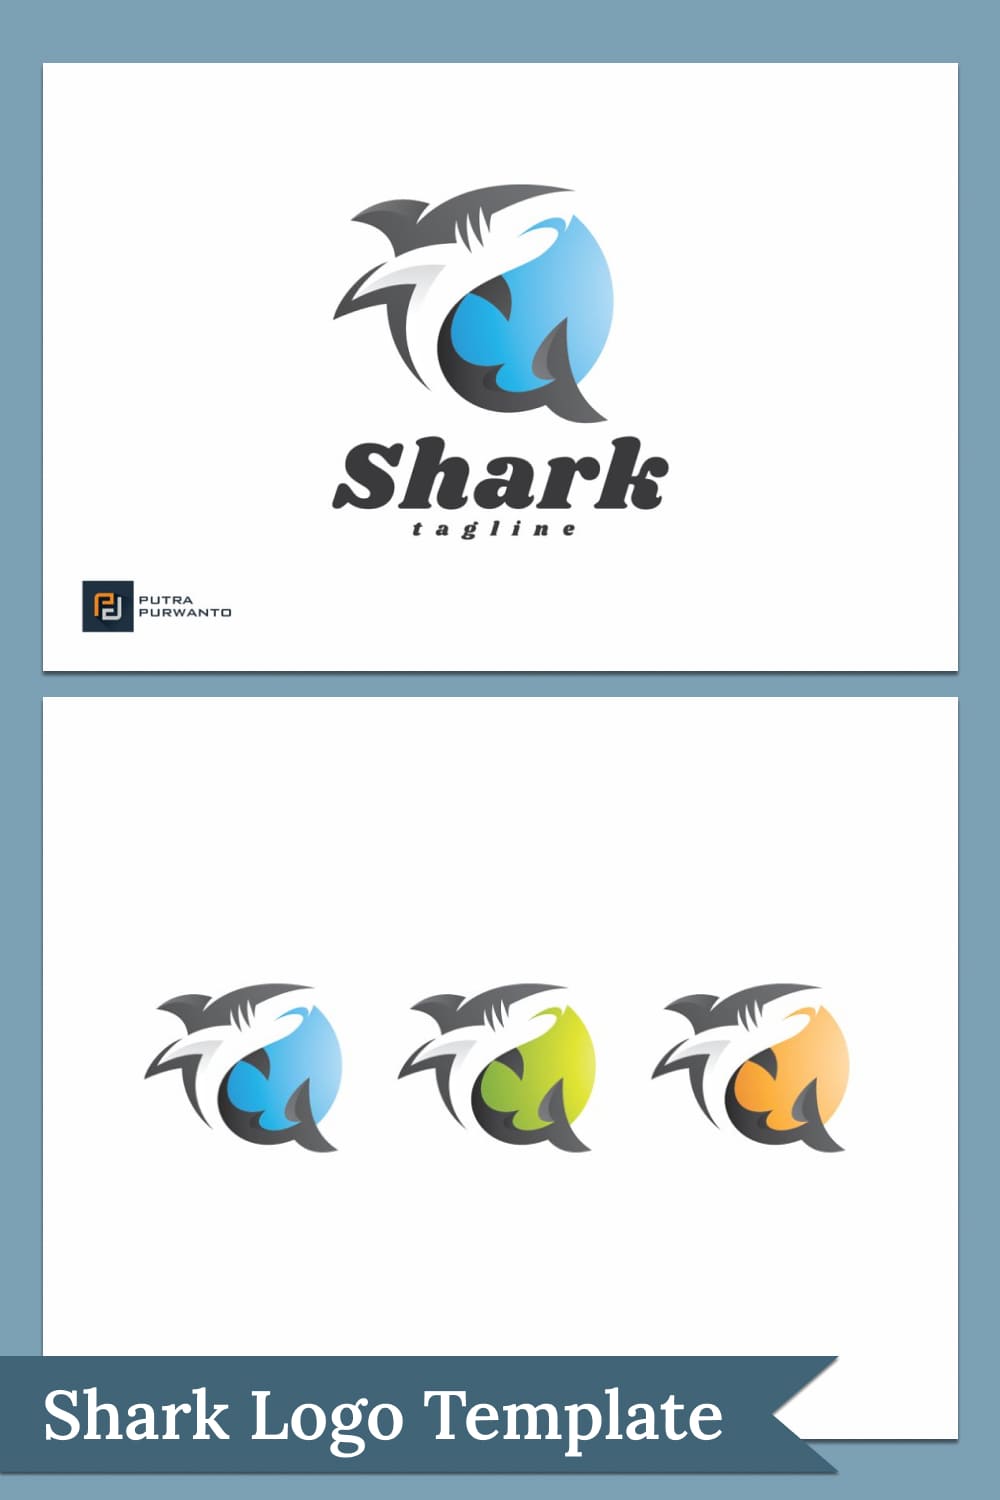 Shark logo template - pinterest image preview.